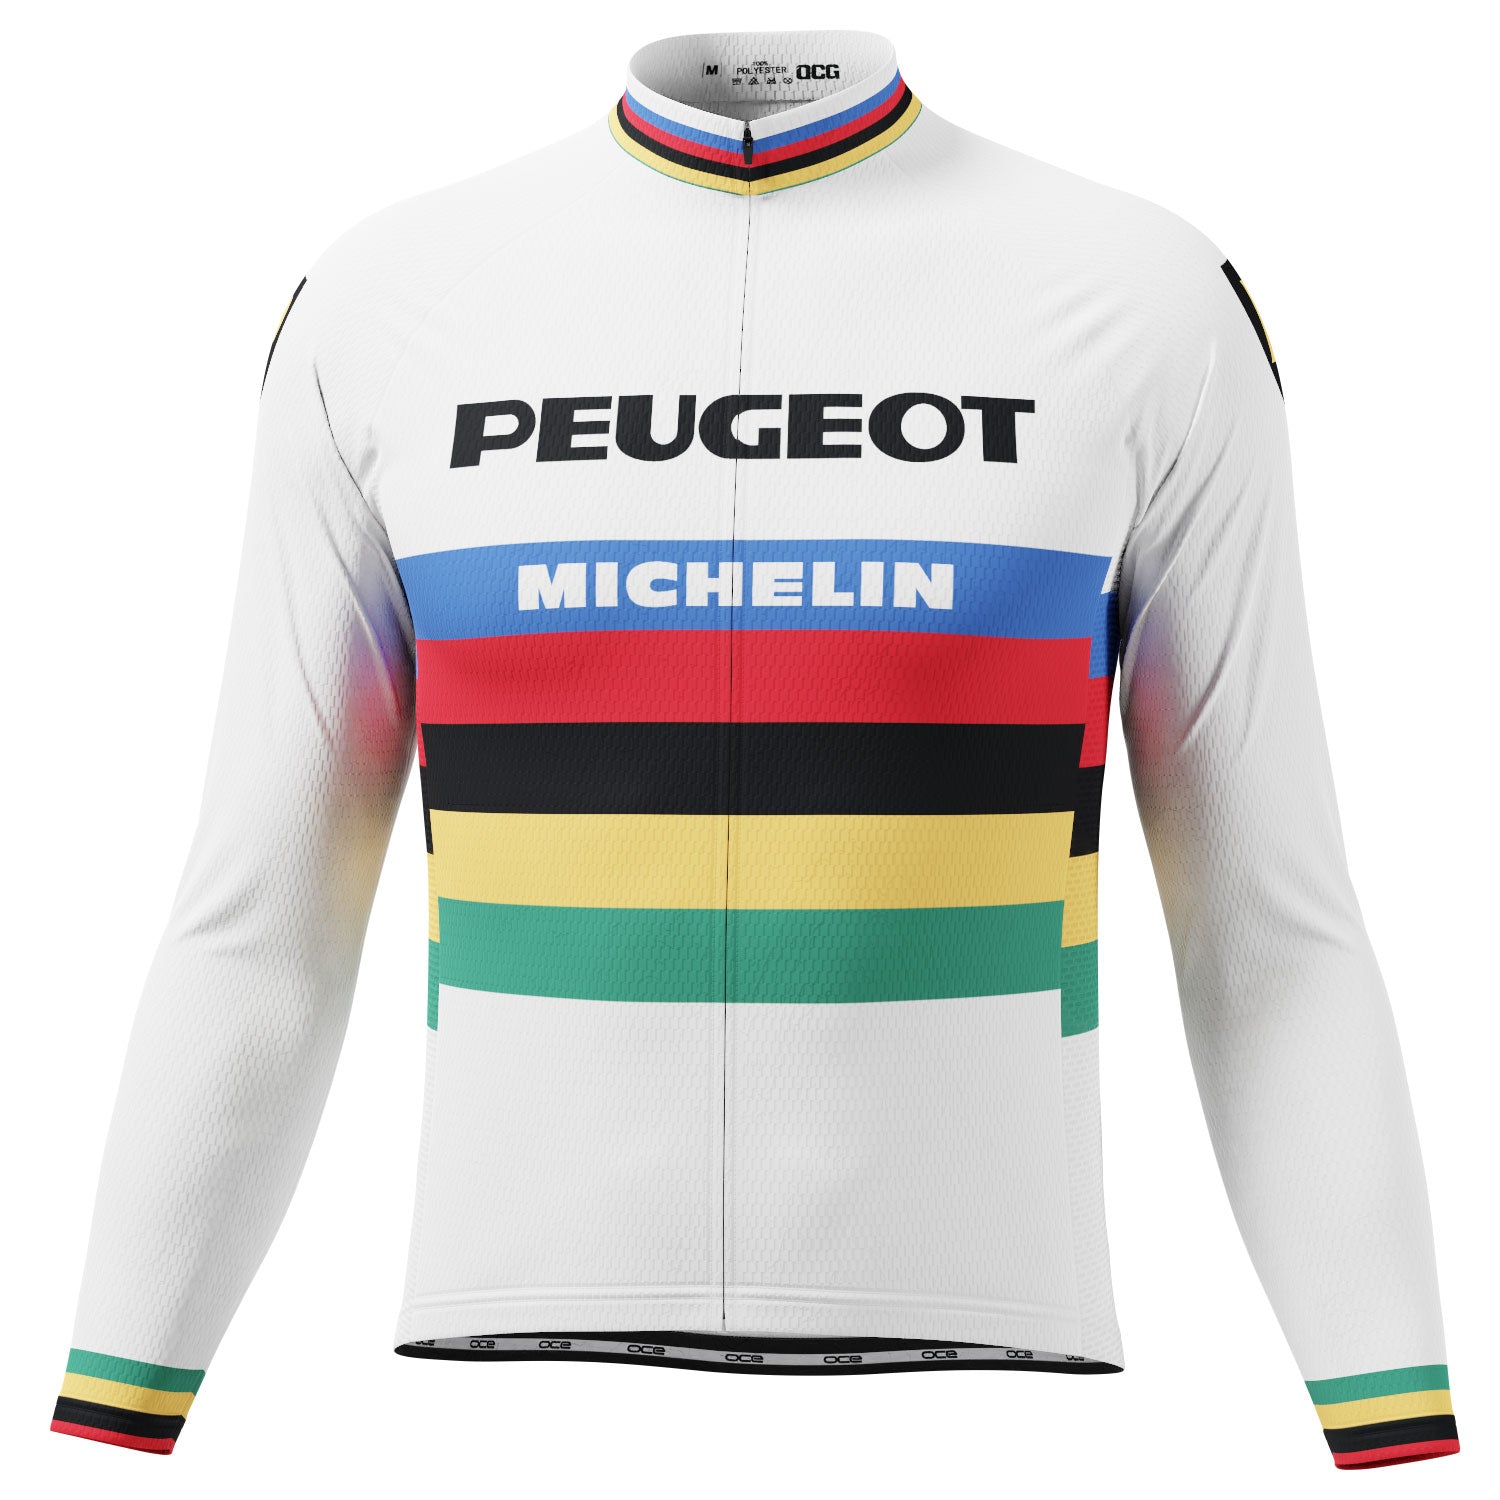 Men's Peugeot BP Michelin Retro Classic Long Sleeve Cycling Jersey